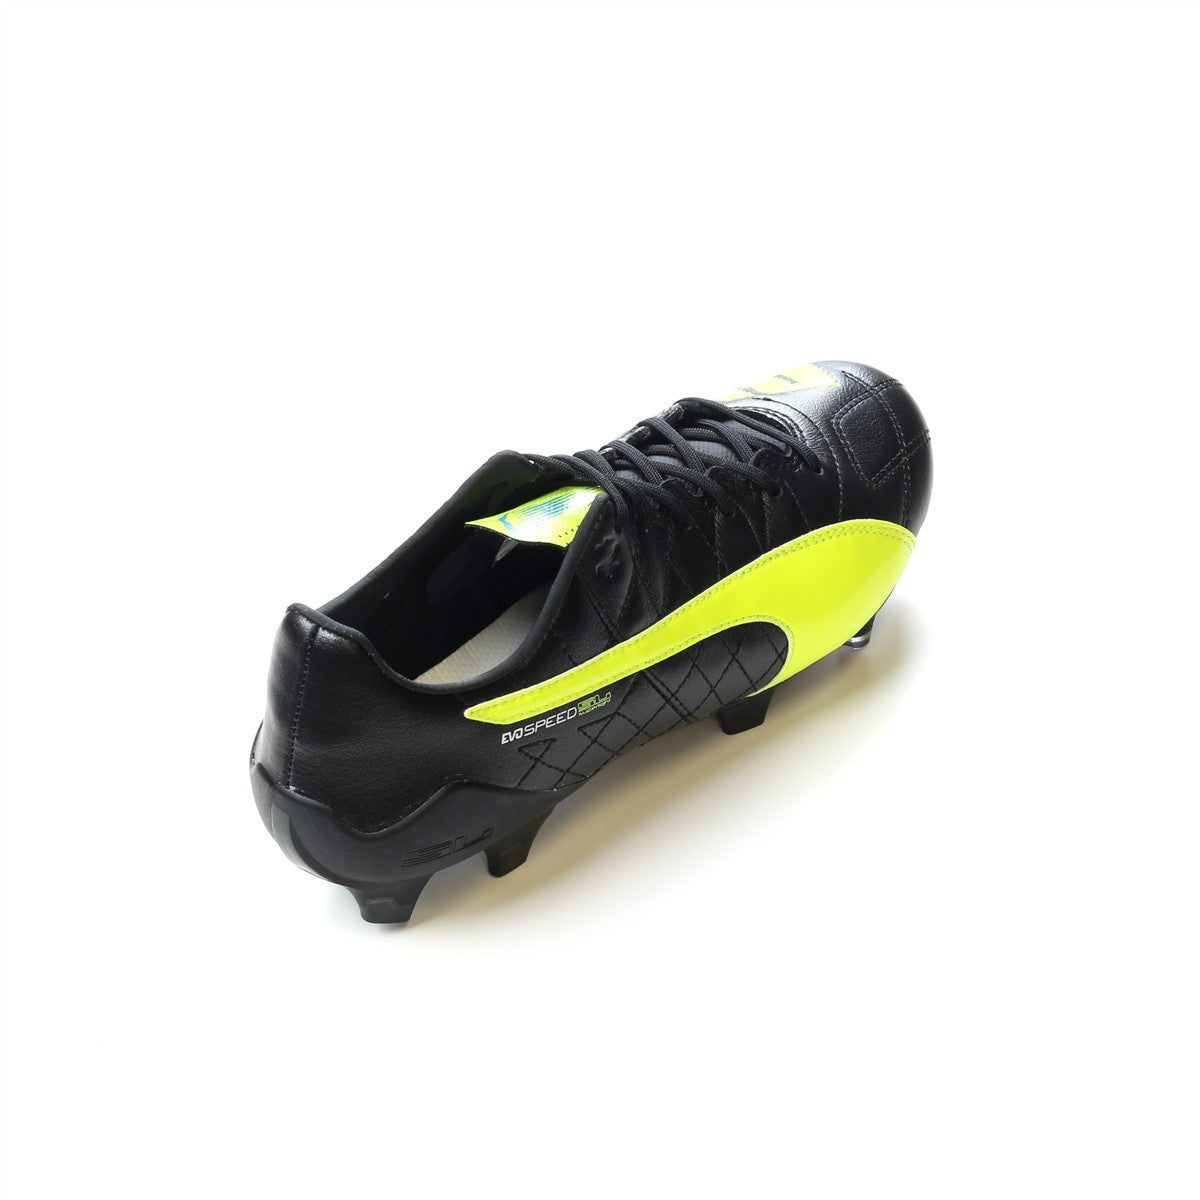 Puma evoSPEED SL LTH FG cuir soccer cleats black yellow lv3